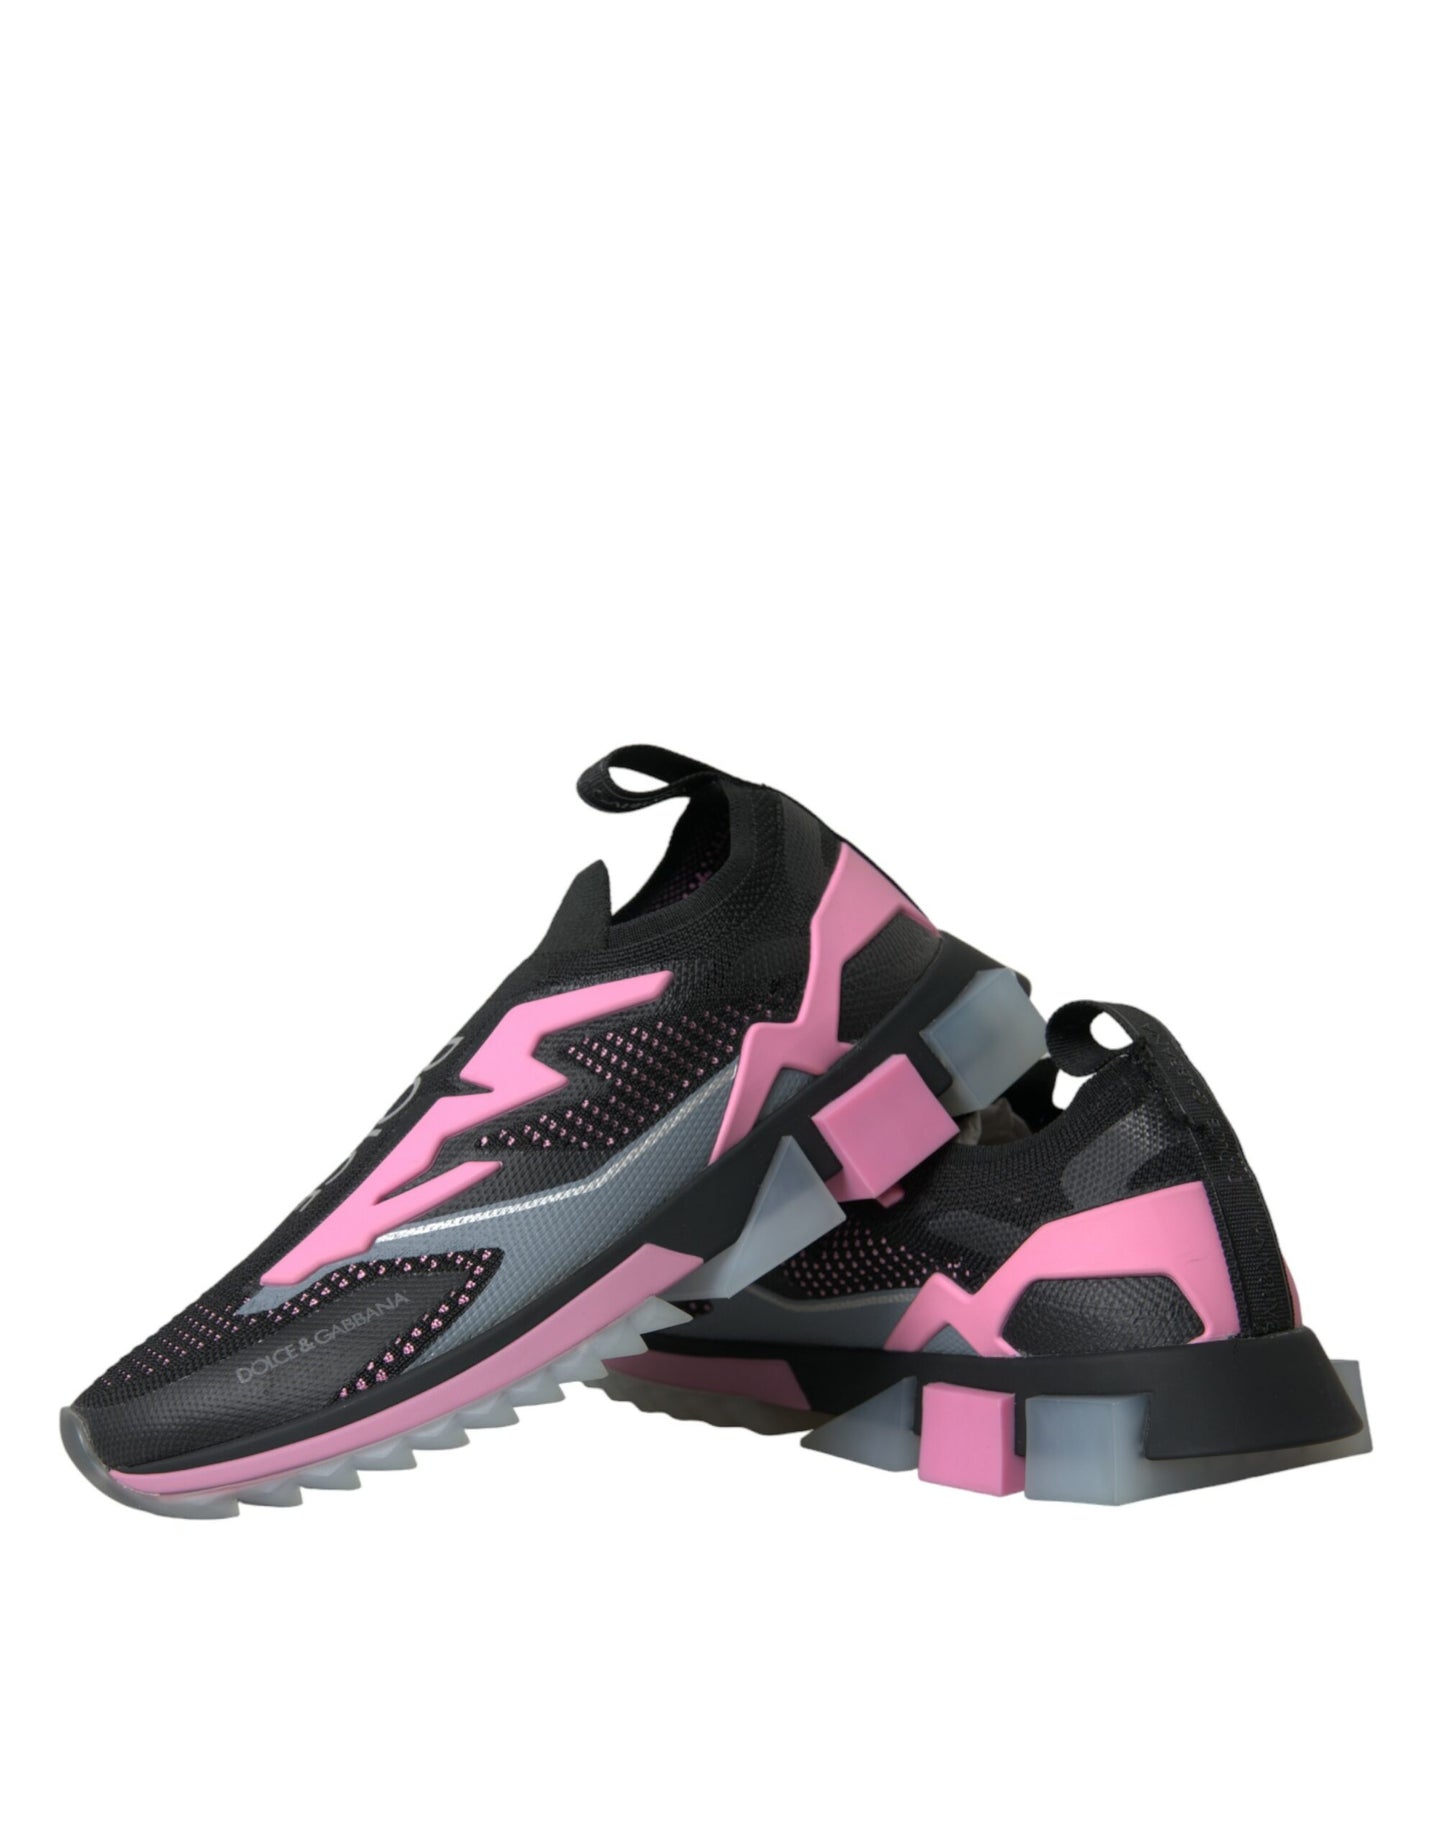 Dolce & Gabbana Black Pink Slip On Sorrento Sneakers Shoes